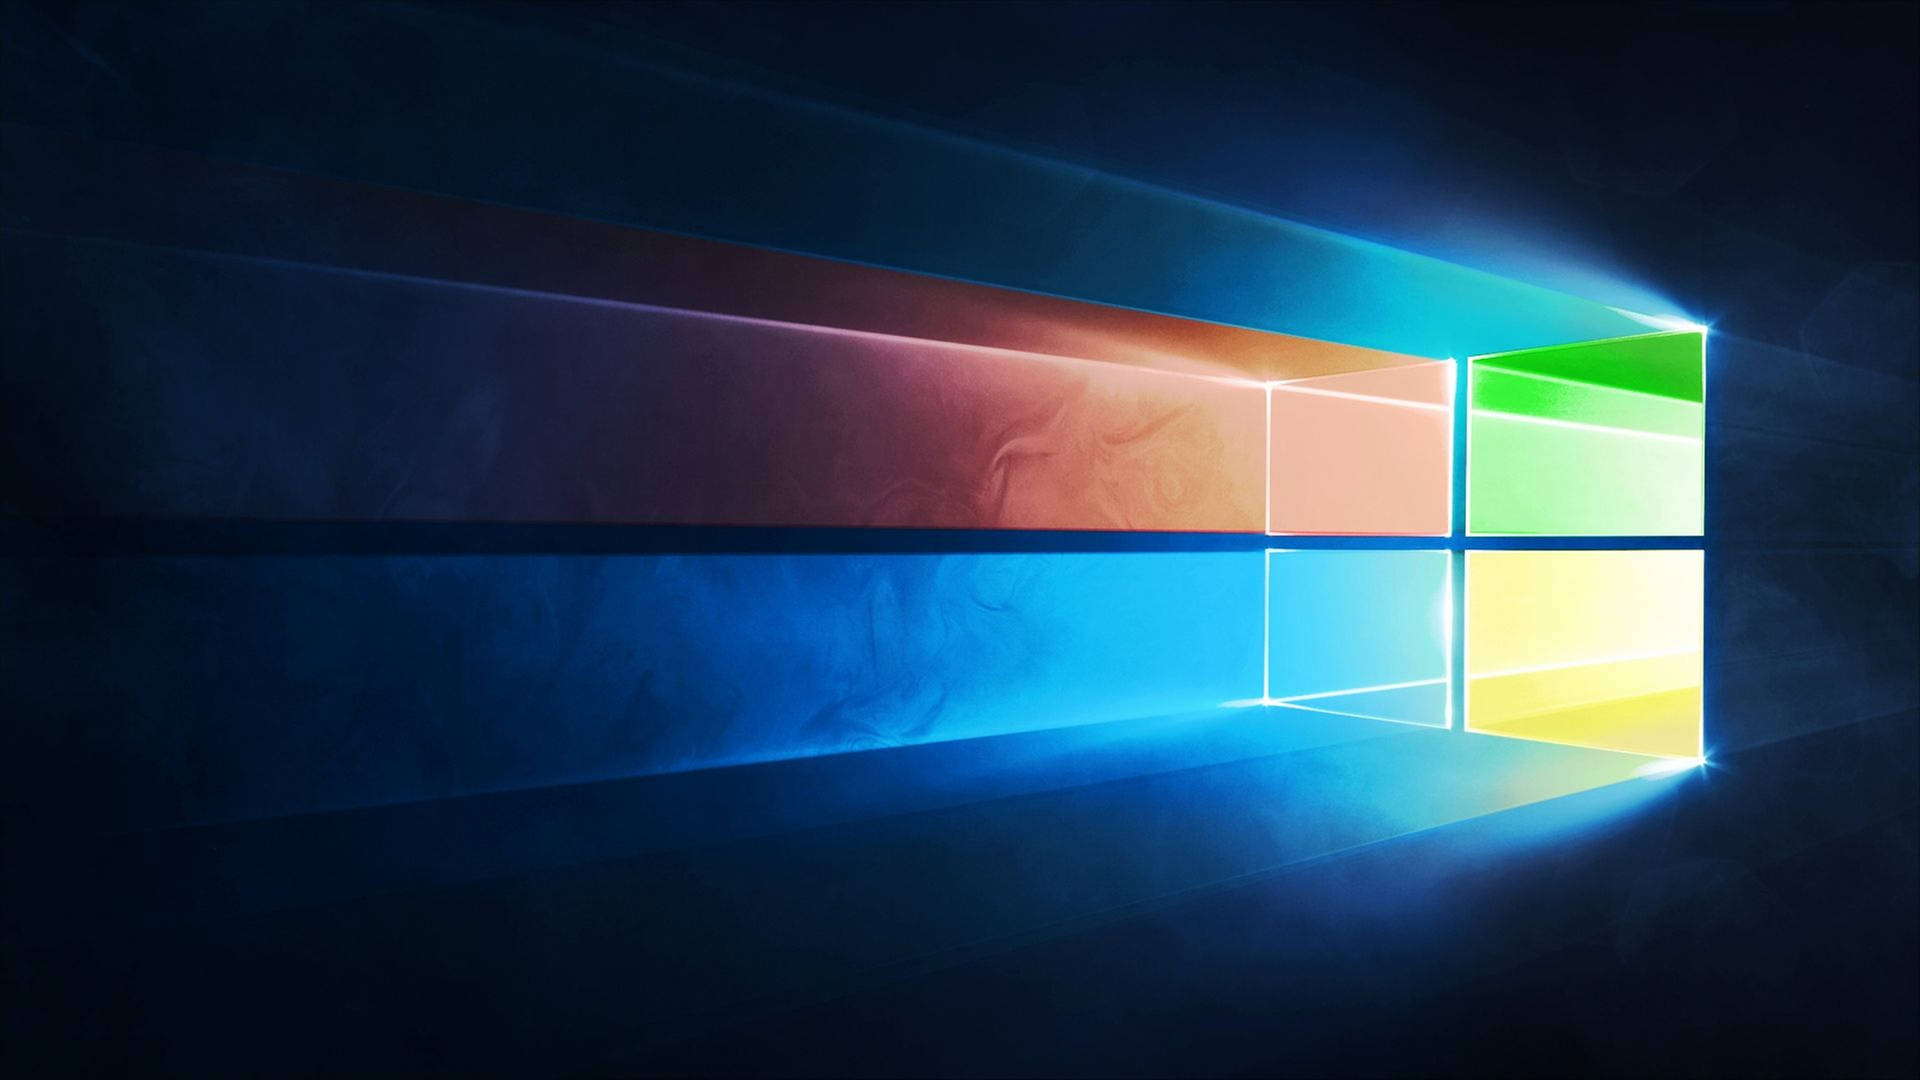 Vibrant Windows Logo On A Clean, Crisp 4k Background